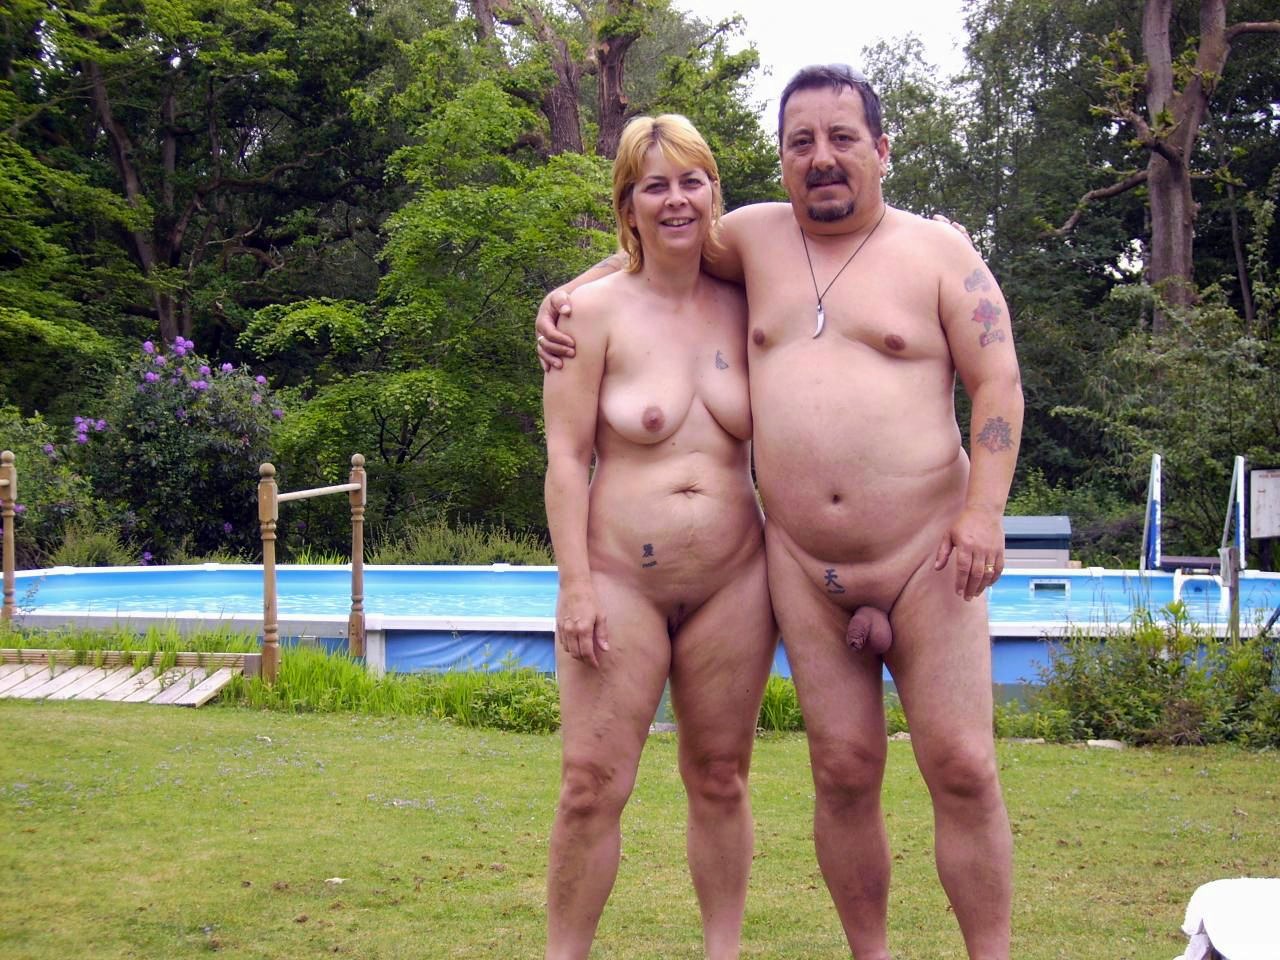 https://www.nudismlife.com/galleries/nudists_and_nude/nudists_couple/nudists_nude_naturists_couple_0424.jpg